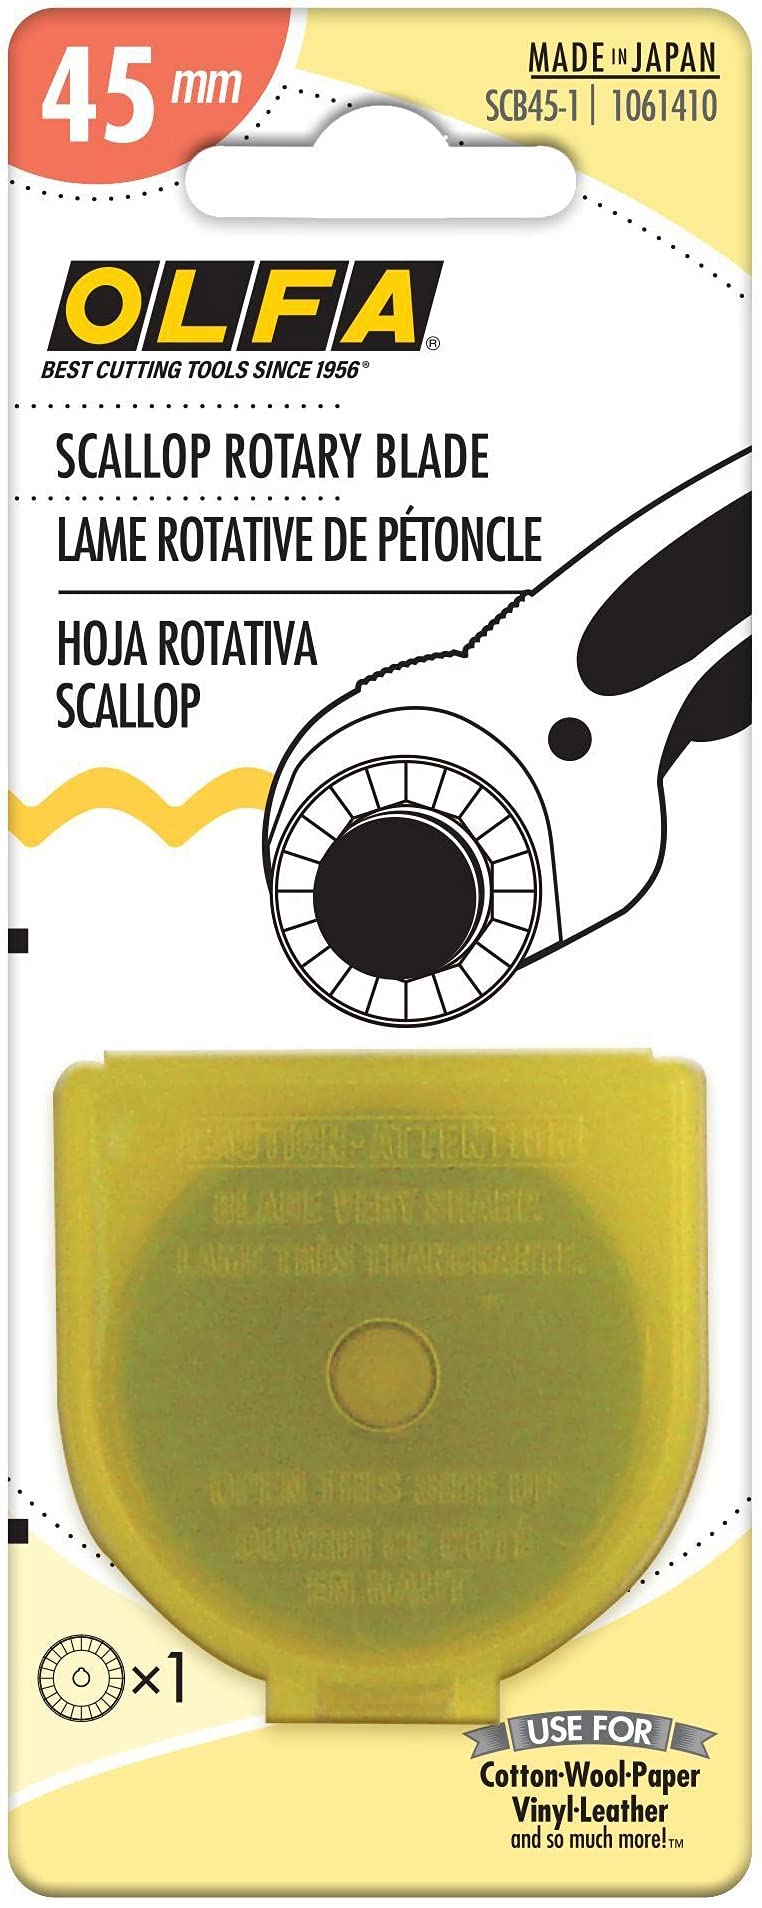 Olfa 60 mm Ergo Rotary Cutter - The Confident Stitch